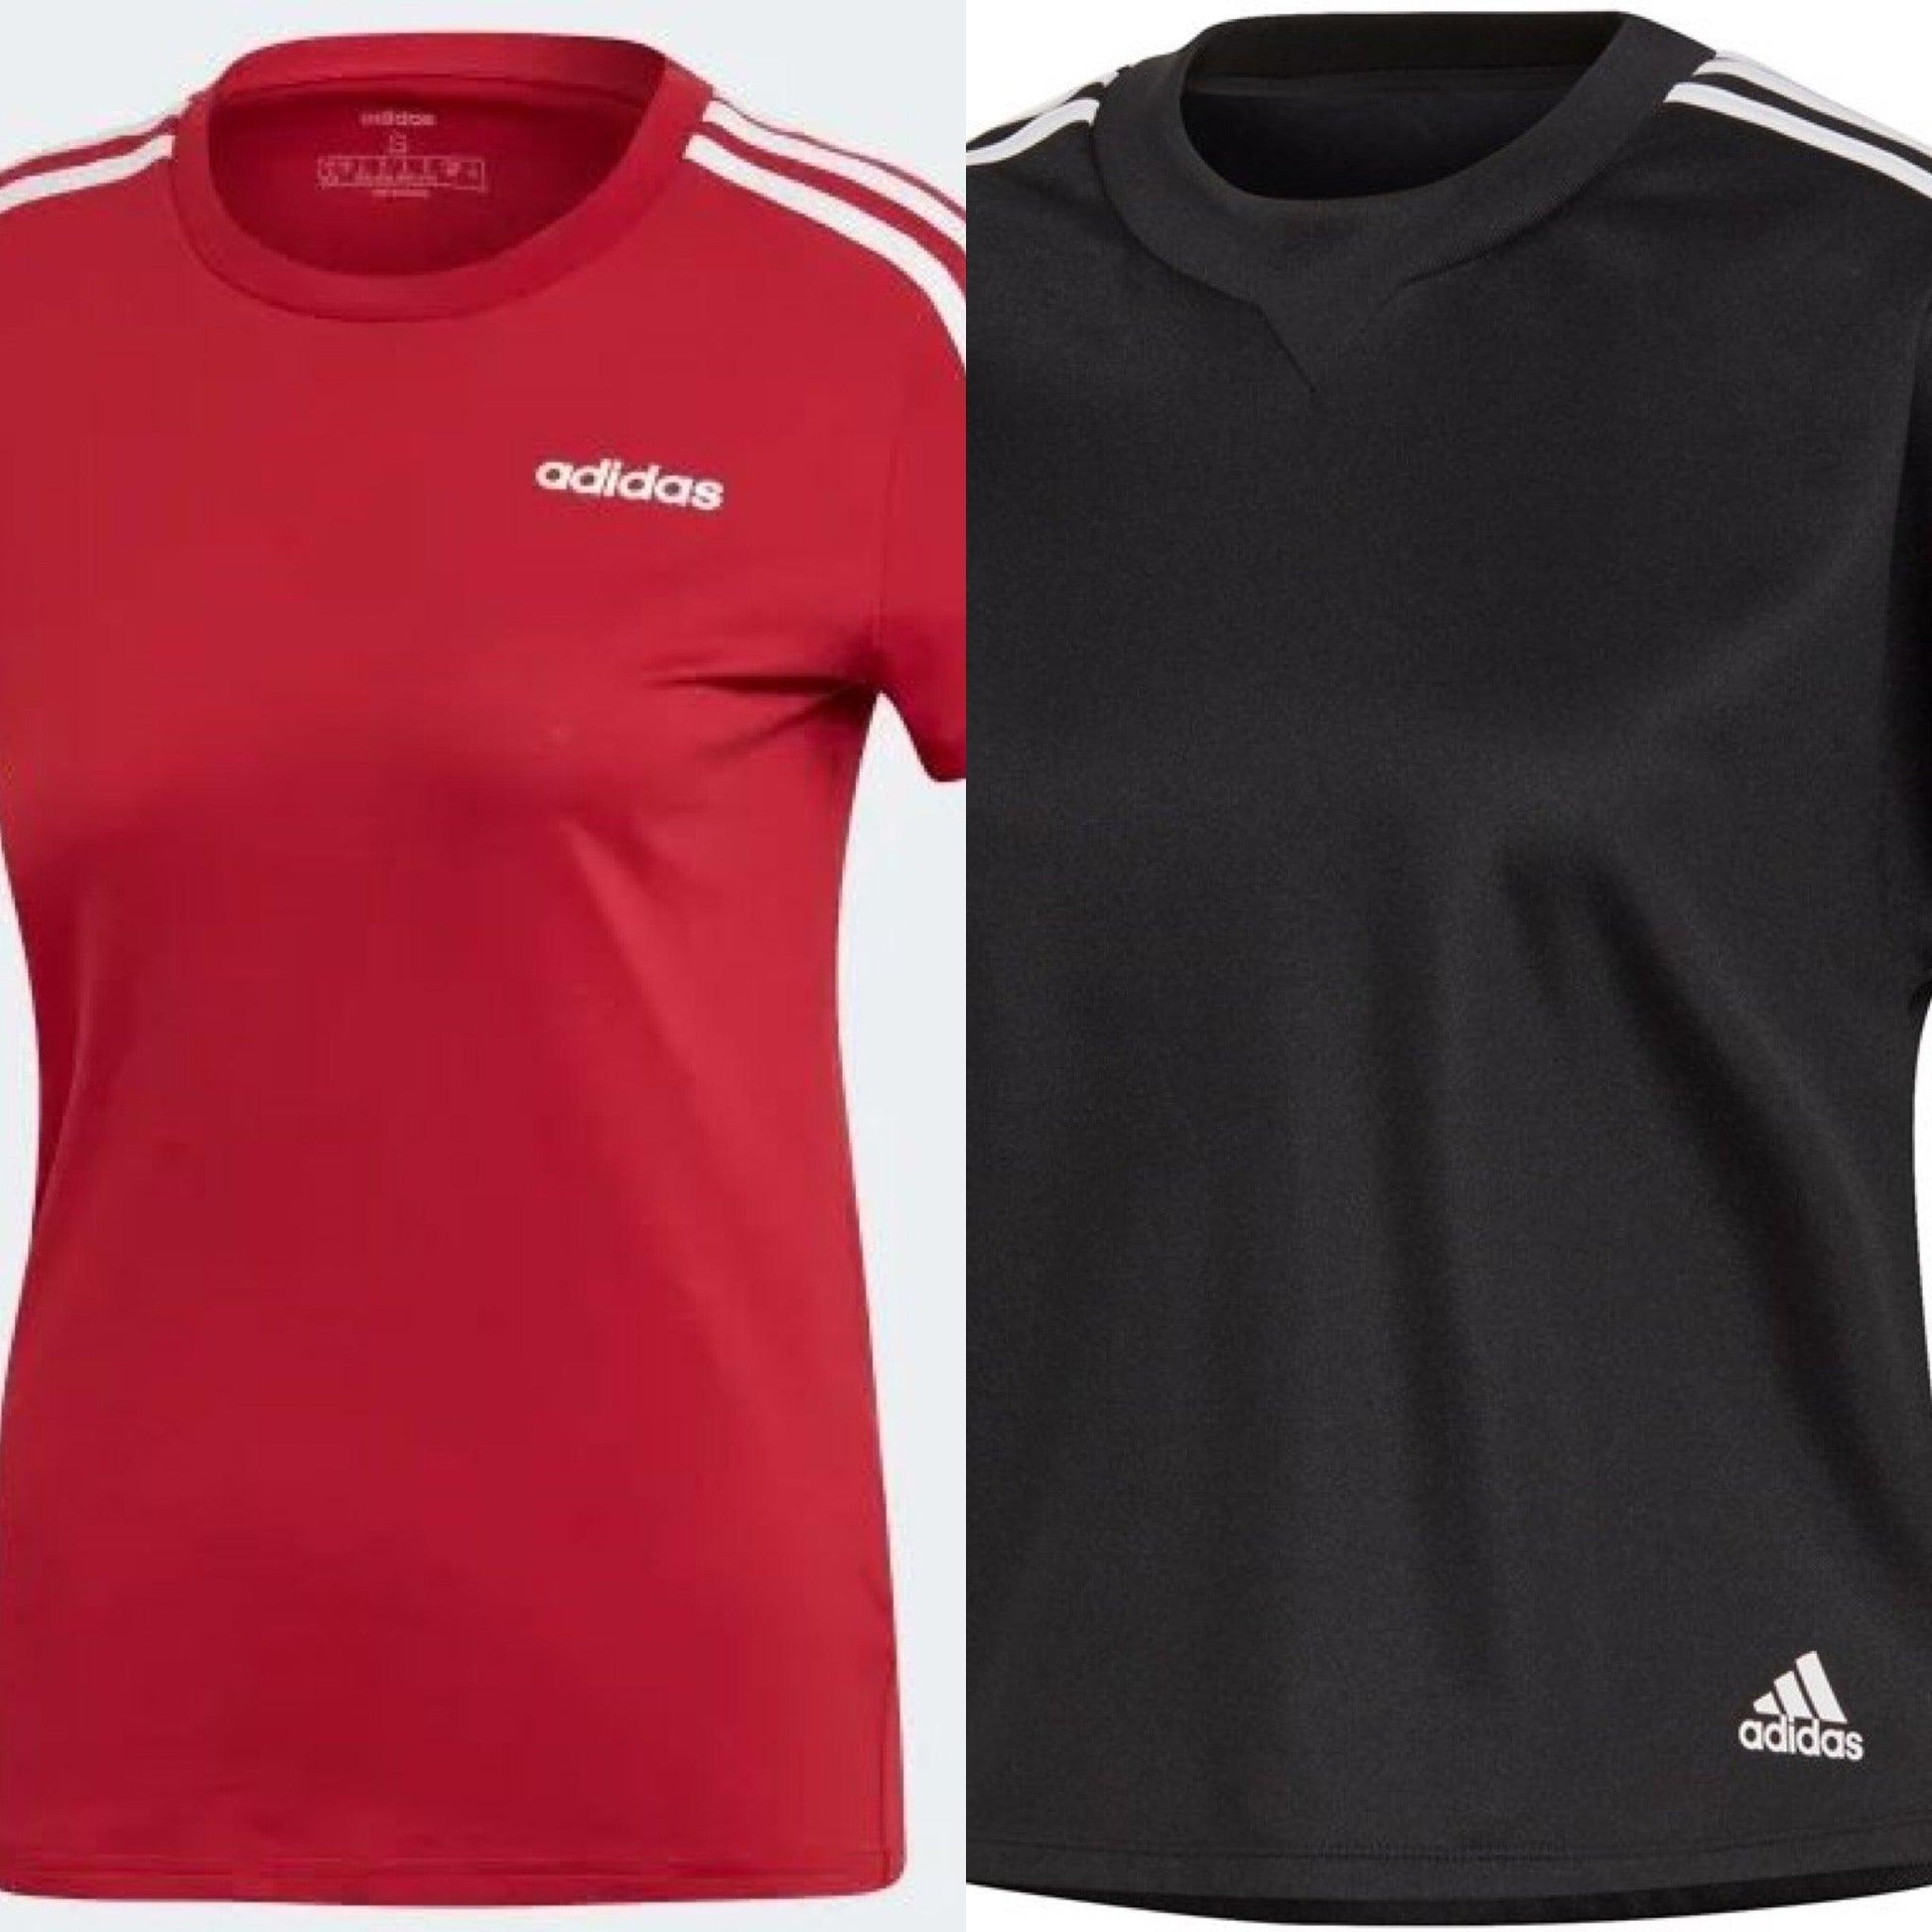 Adidas 3 Stripe T-shirt, Adidas, sportswear, activewear